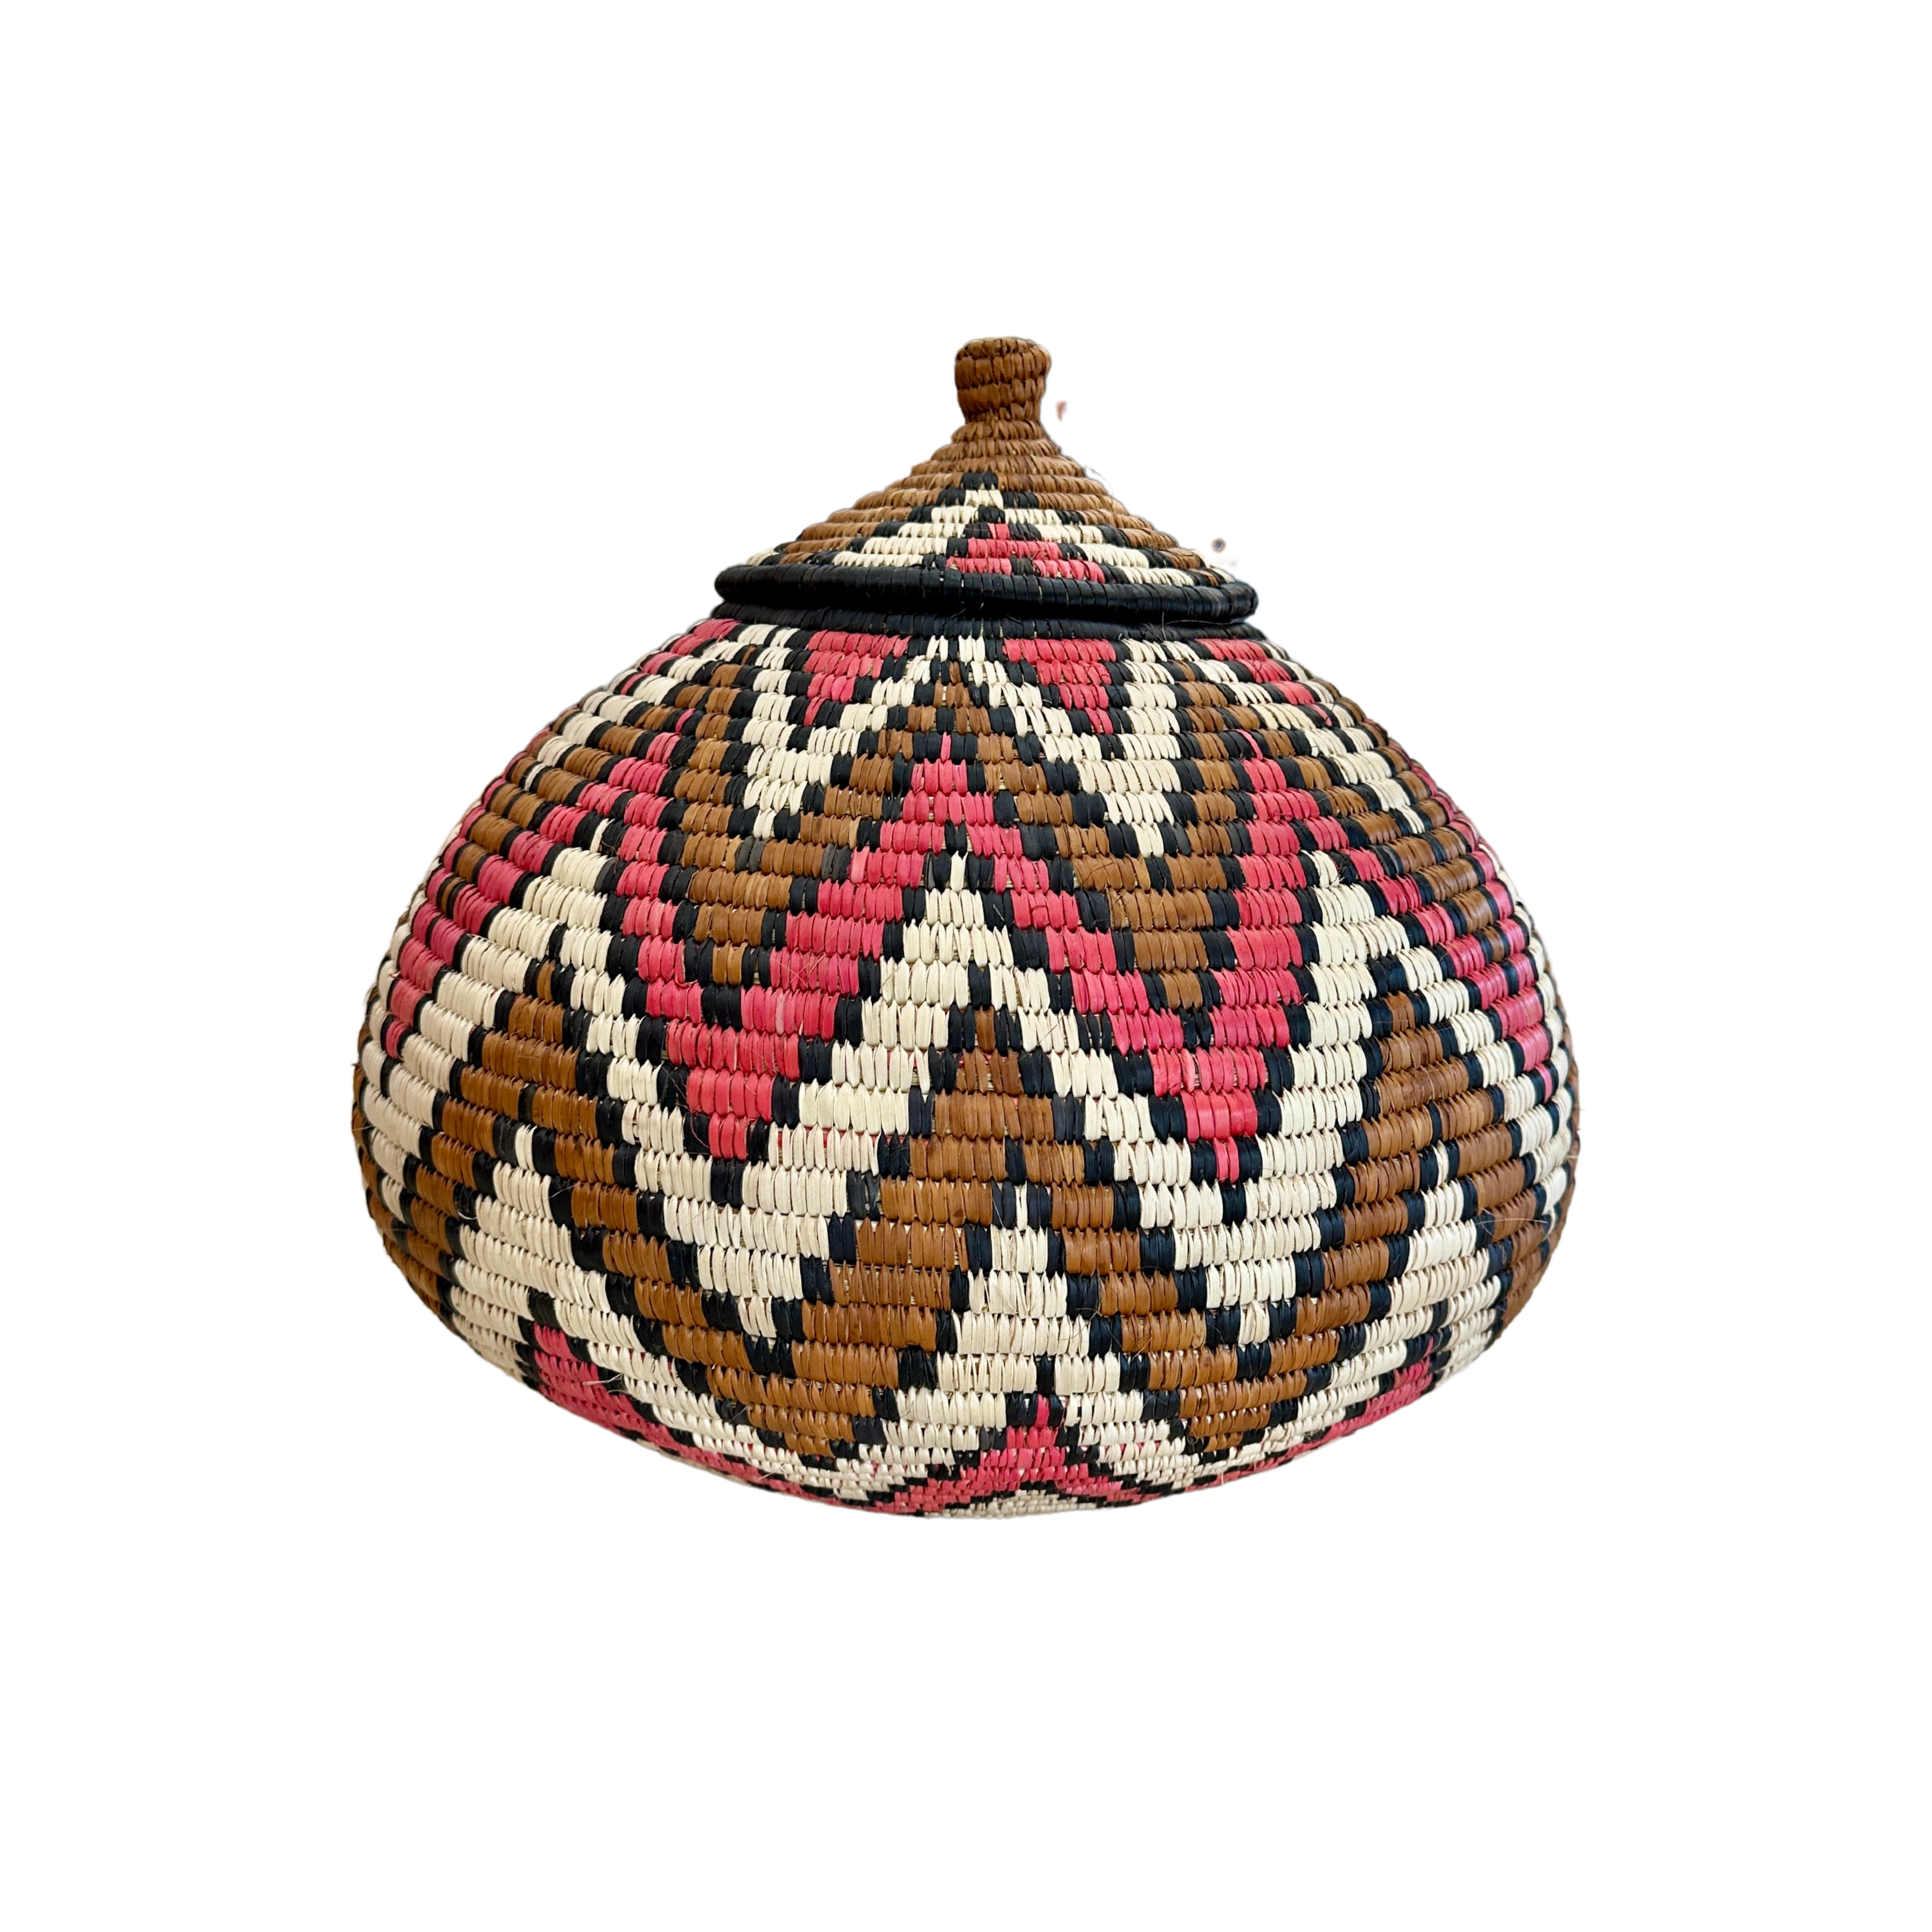 Zulu Hand-Woven Reed Basket - The Zama Basket